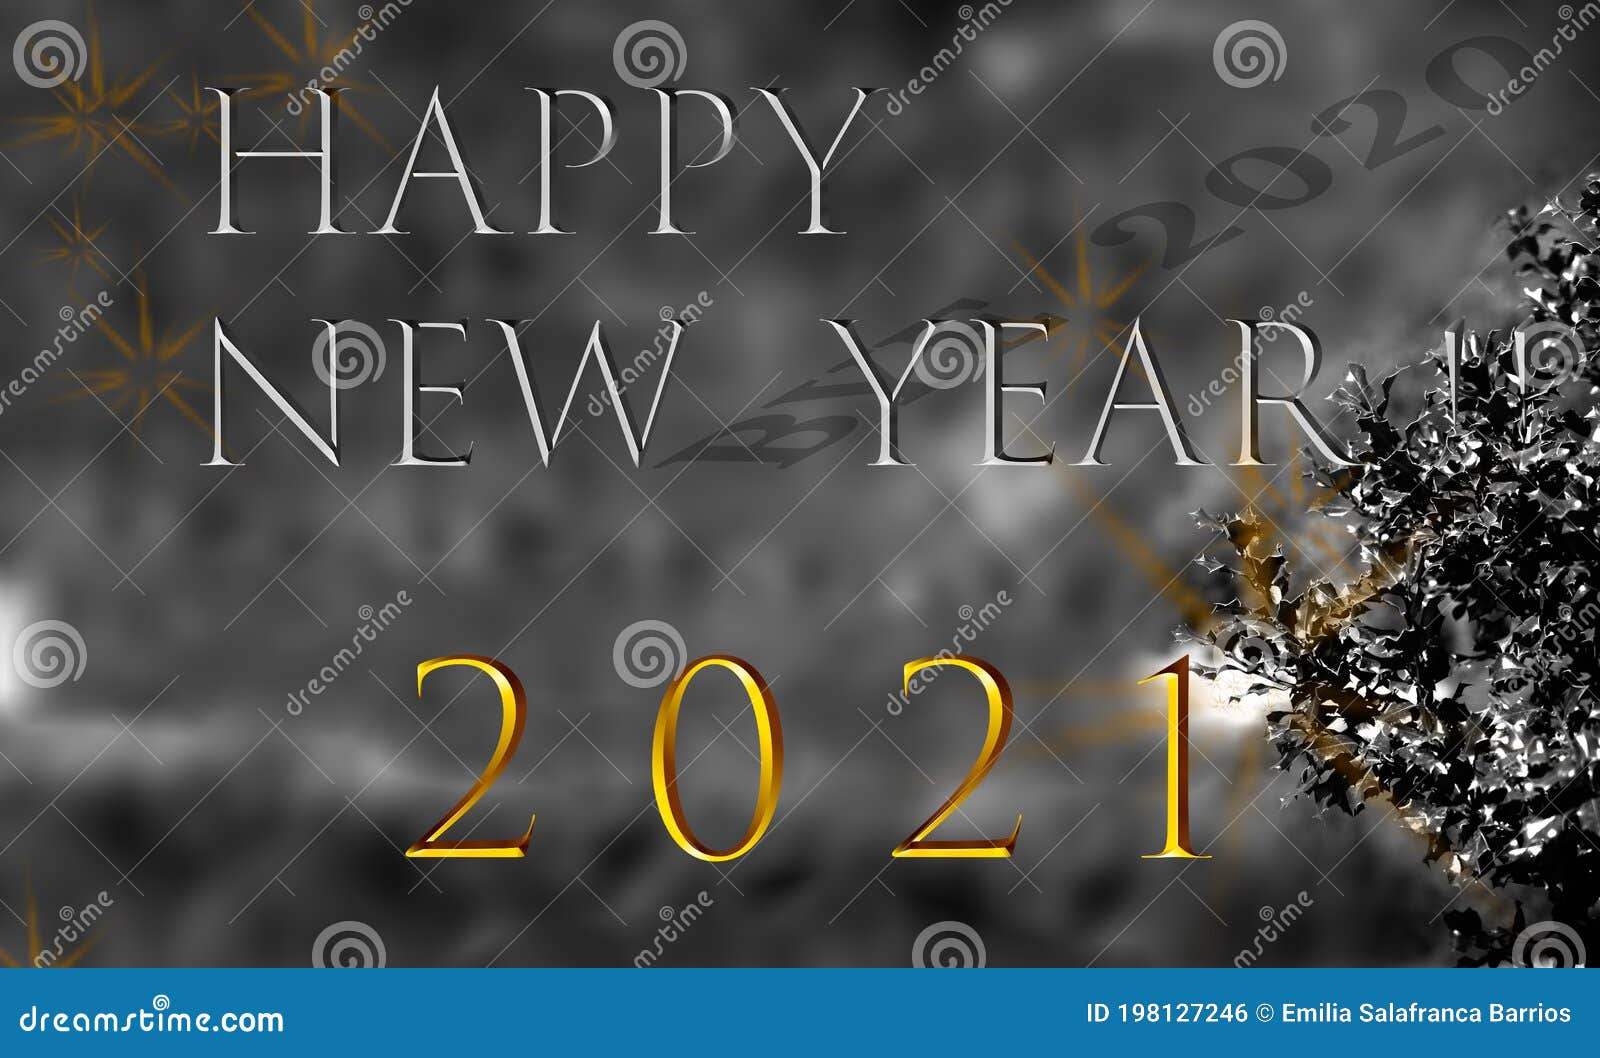 tarjeta de felicitaciÃÂ³n de navidad con el texto `feliz aÃÂ±o nuevo 20121 bye 2020`